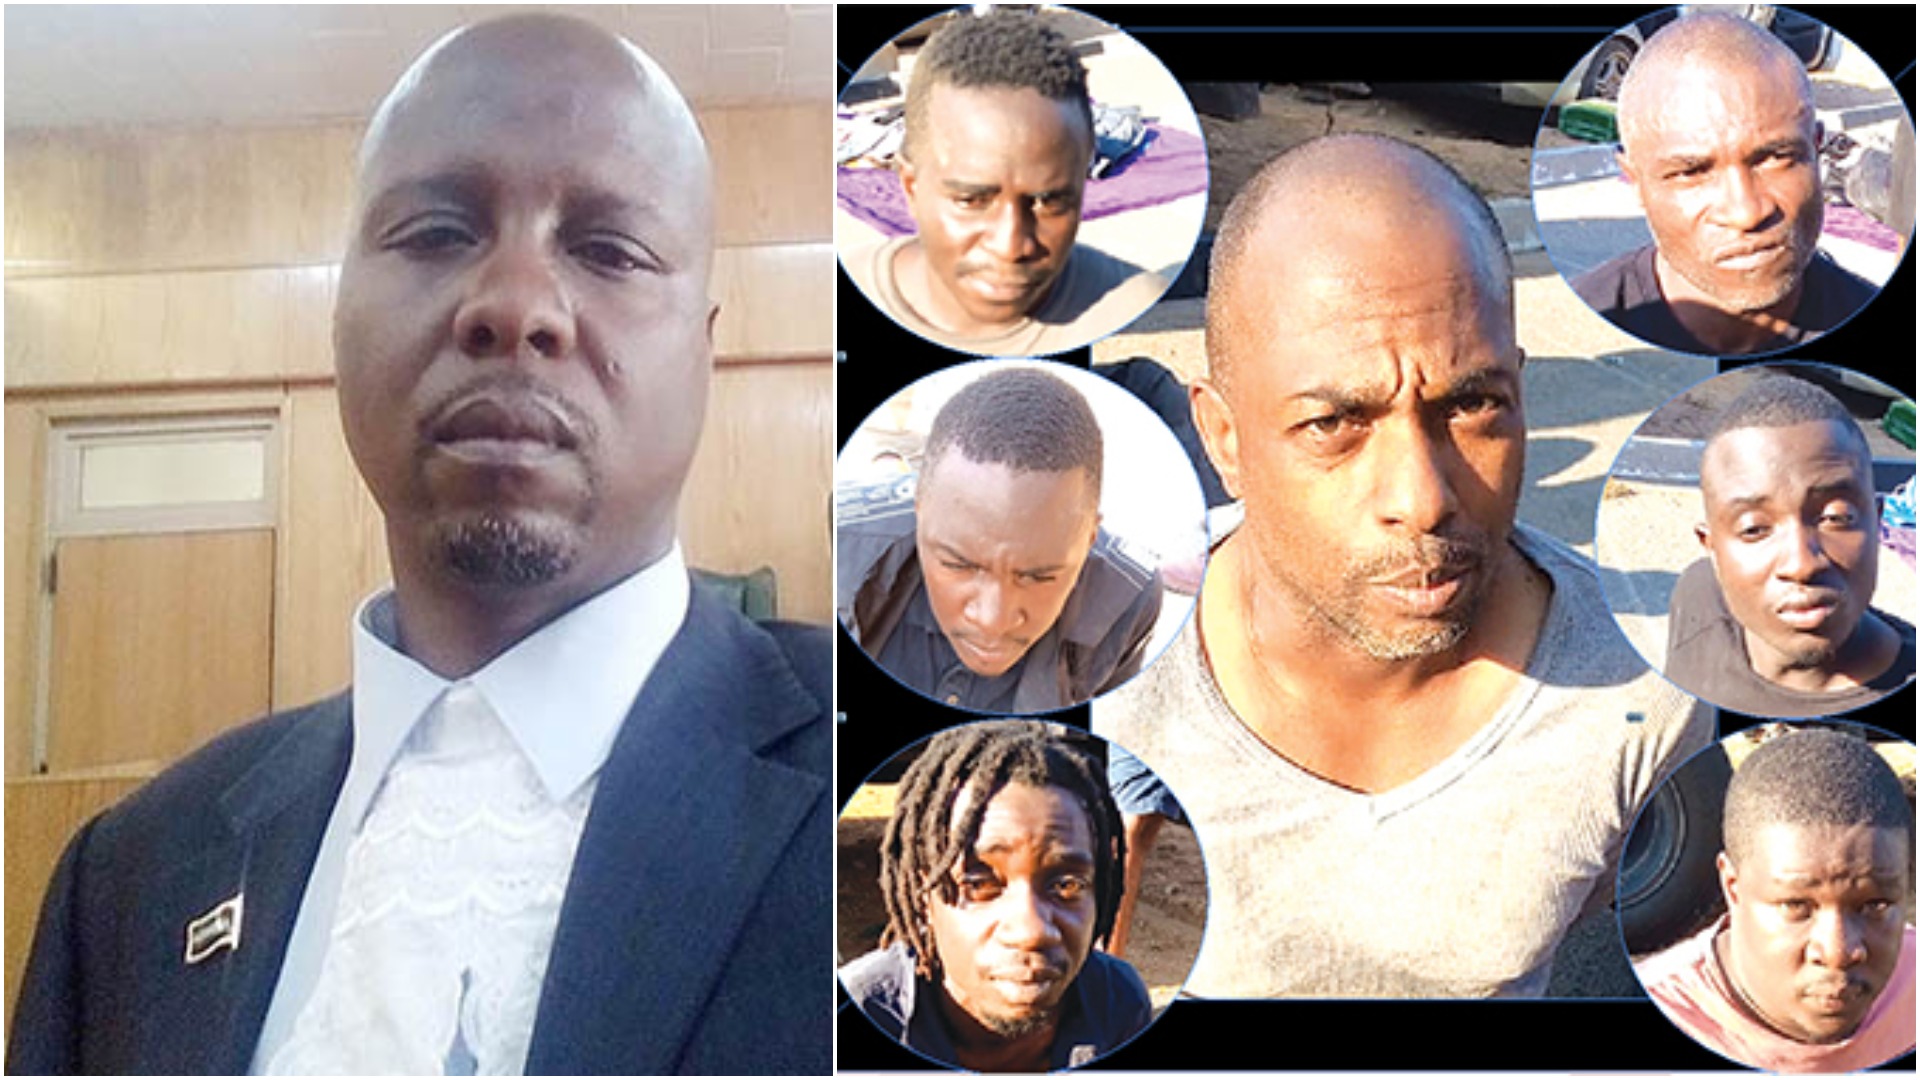 Fugitive Prosecutor Arrested, Notorious Armed Robber Musa Taj Abdul’s Gang Members Back In Custody-iHarare